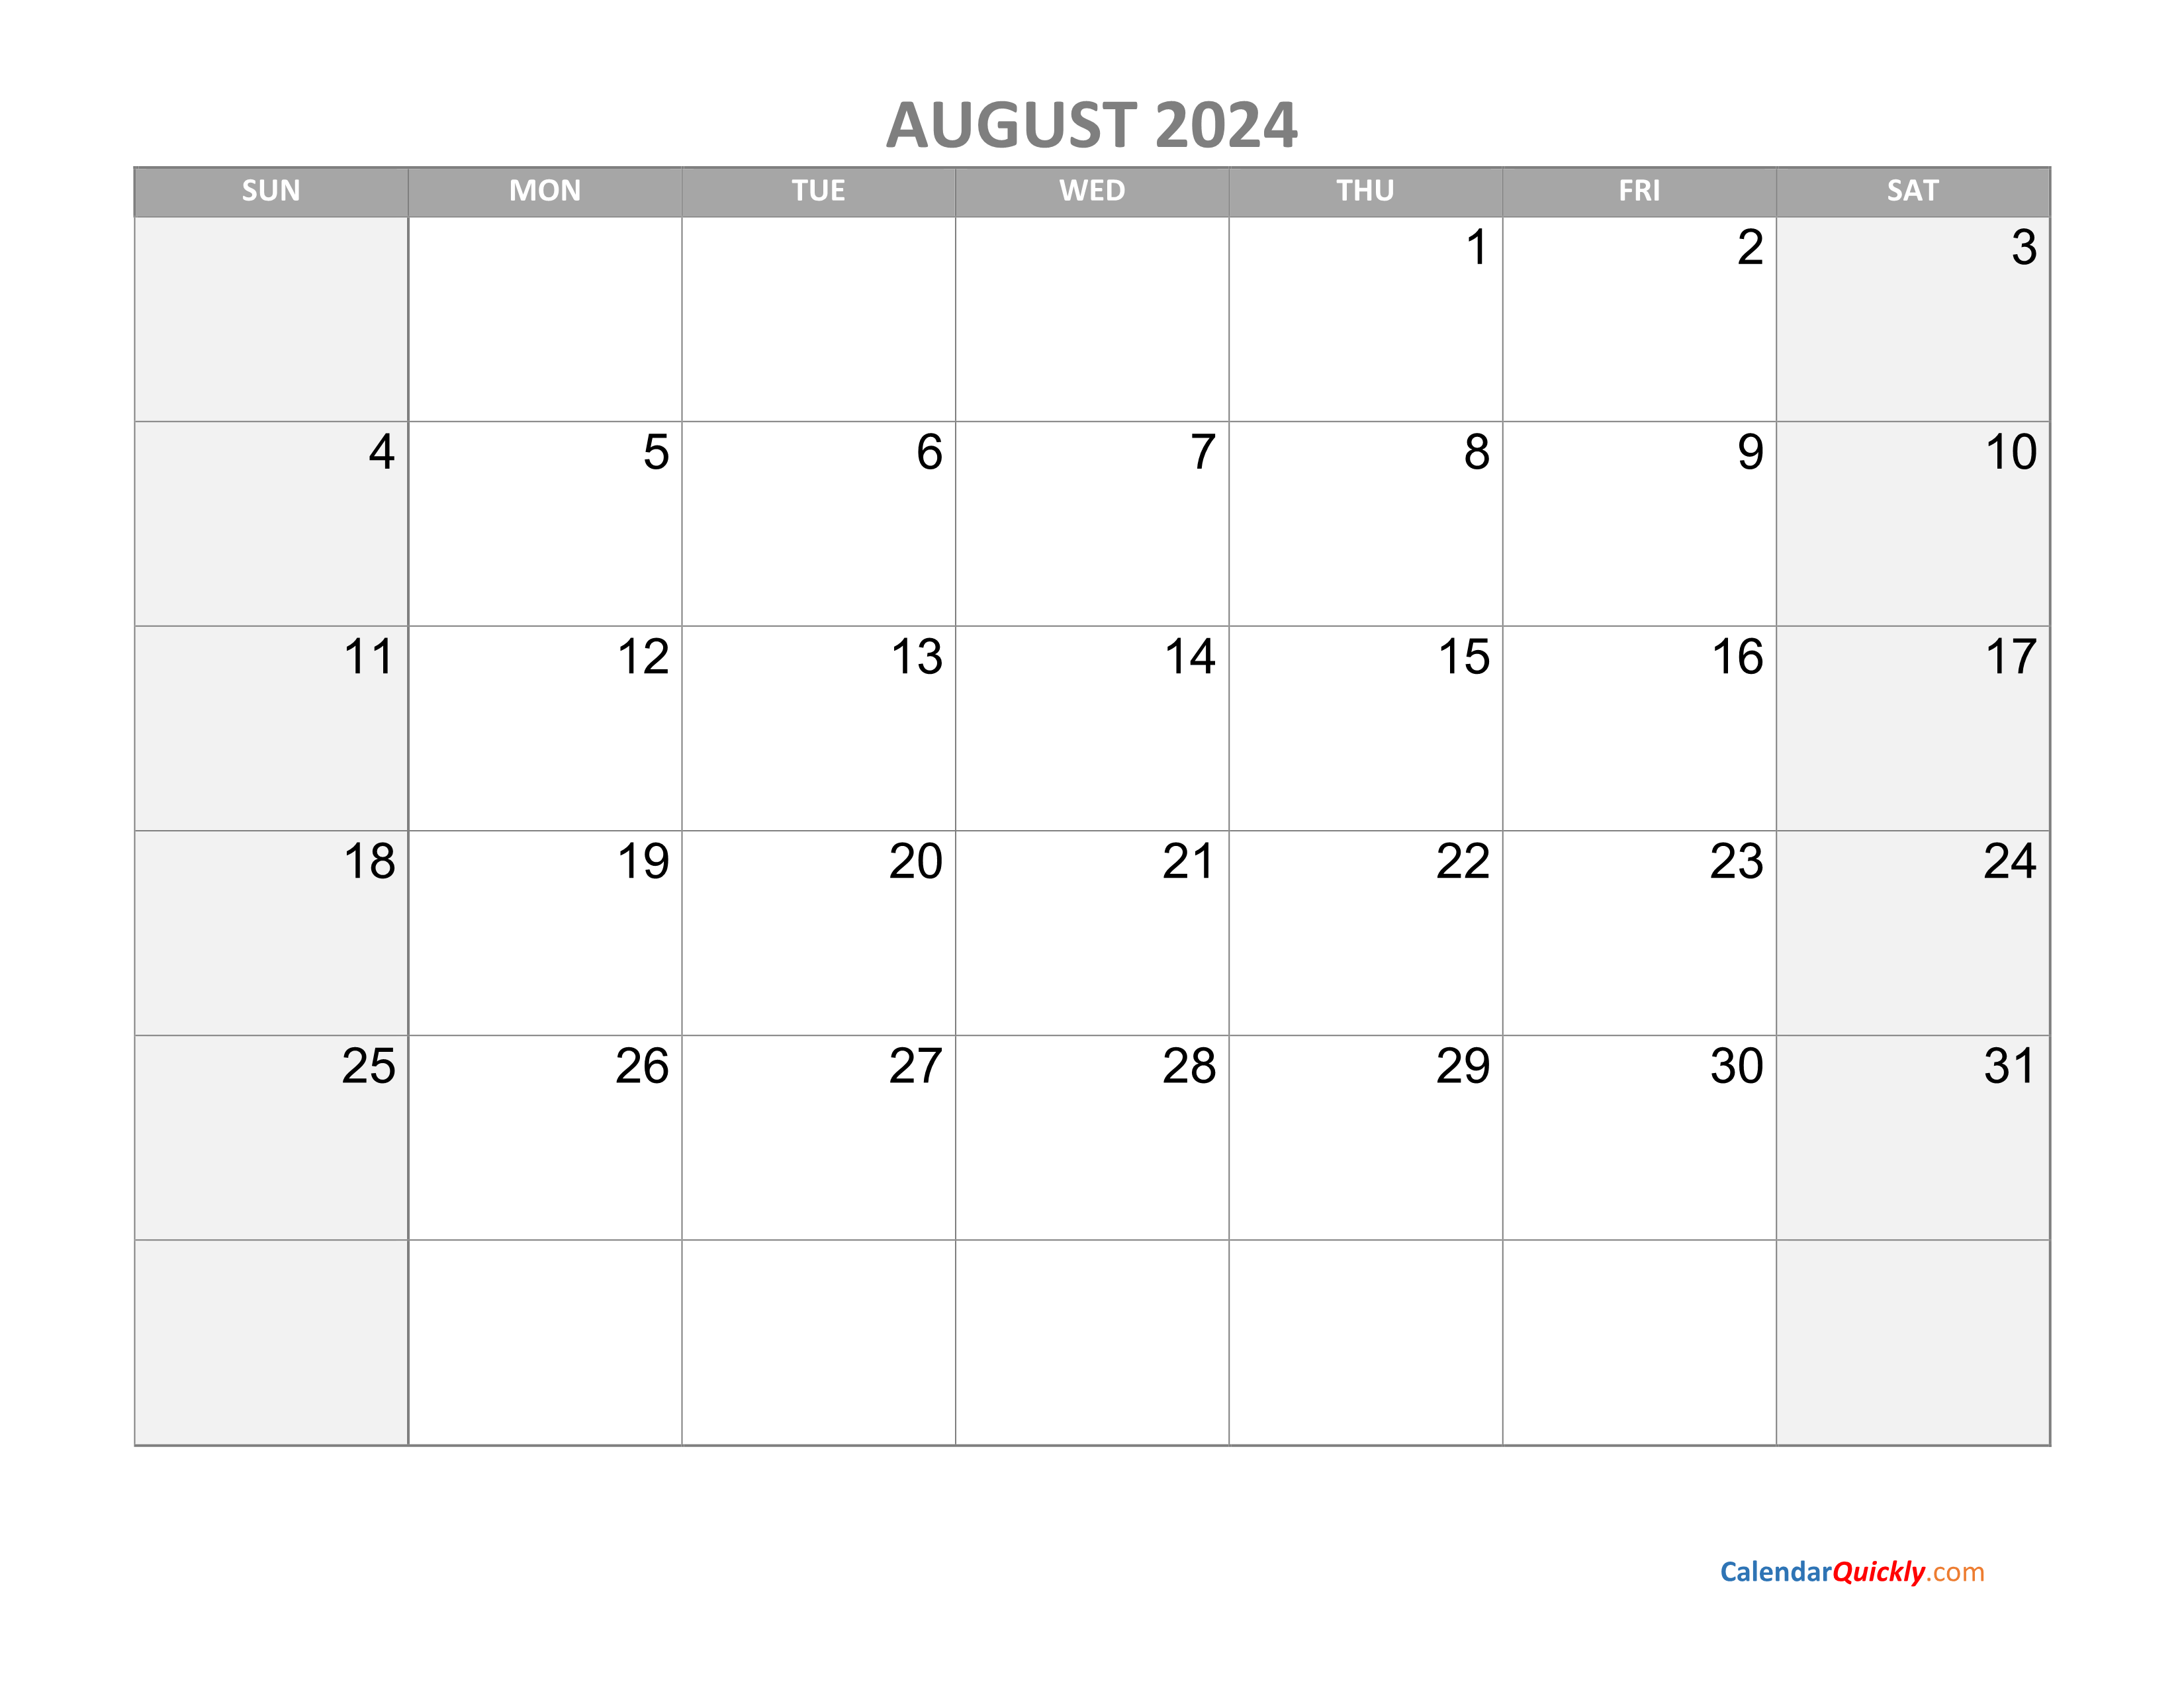 August Calendar 2024 with Holidays Calendar Quickly